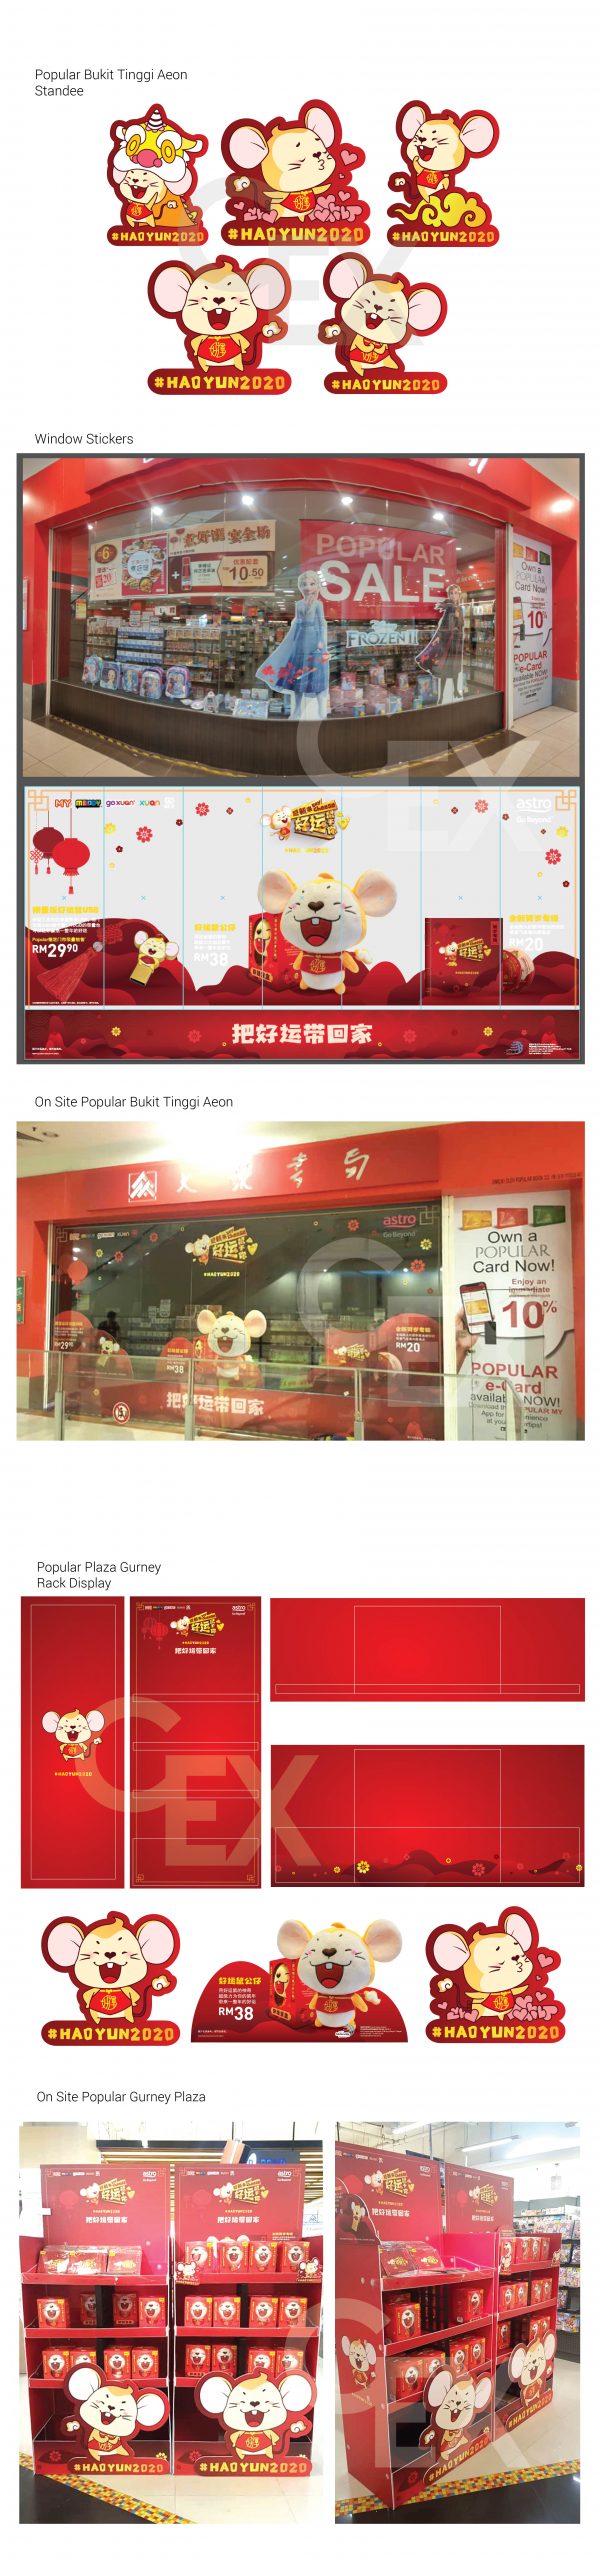 CEX Utama Sdn Bhd | Astro Chinese New Year Popular Window & Rack Display